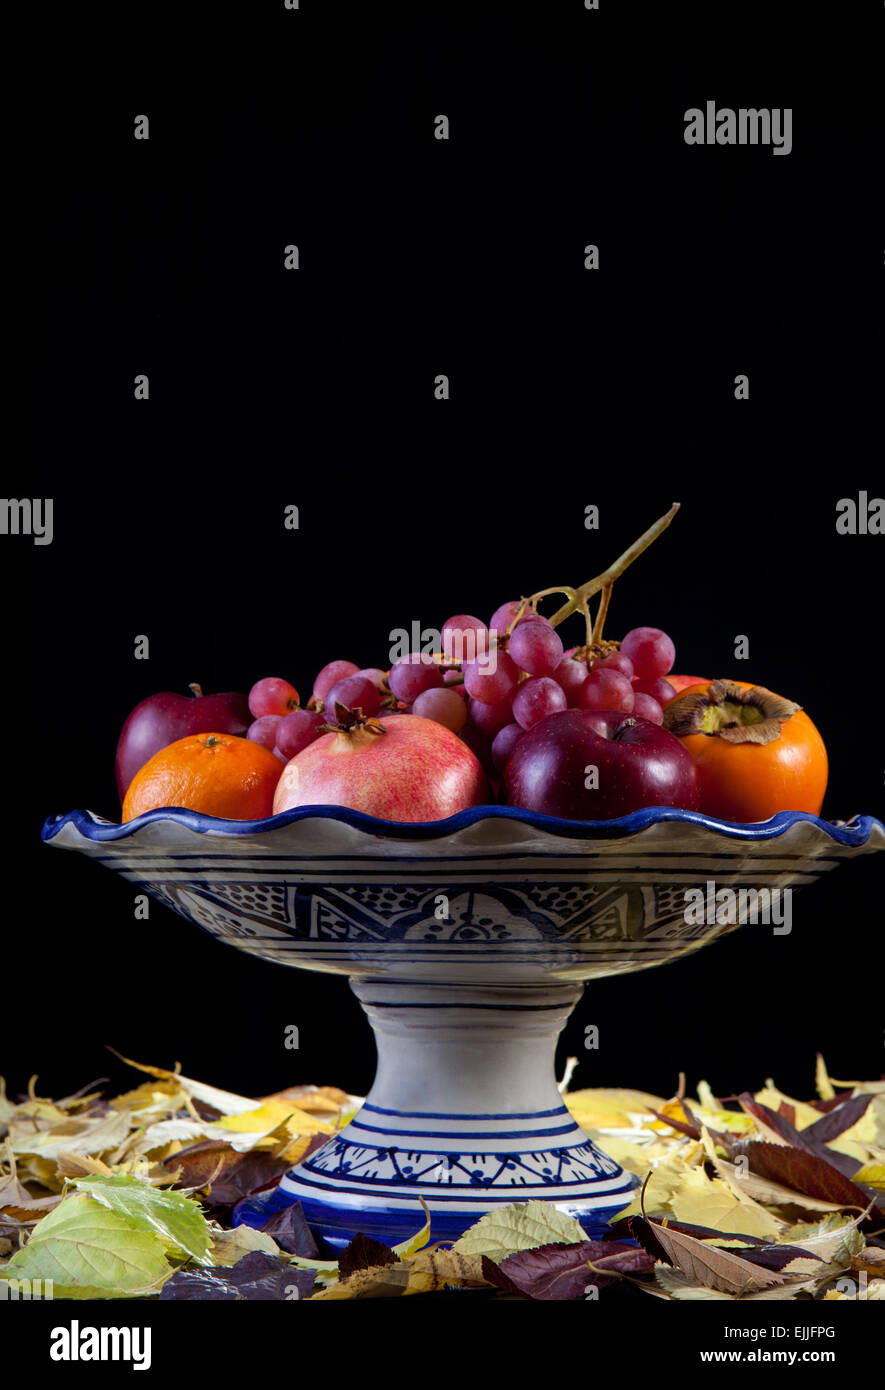 https://c8.alamy.com/comp/EJJFPG/ceramic-fruit-bowl-with-autumn-fruits-isolated-over-black-background-EJJFPG.jpg